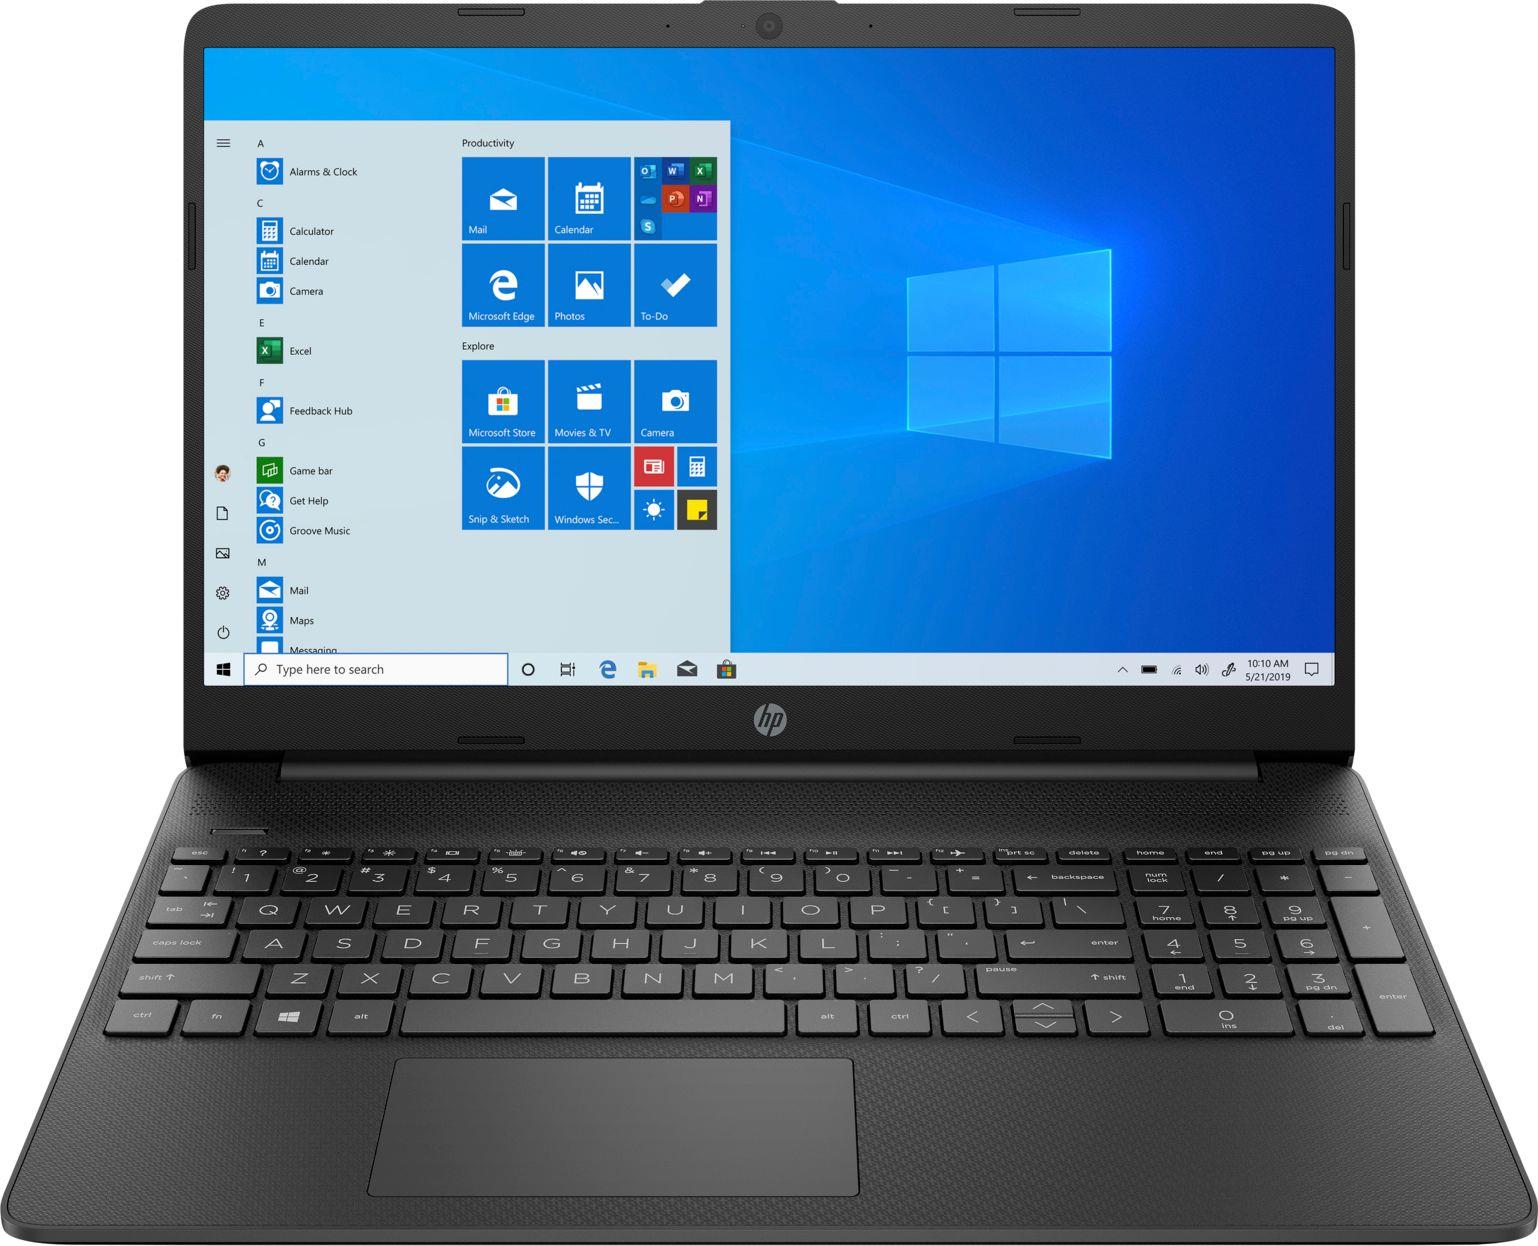 Nešiojamasis kompiuteris HP Laptop 15s-fq1097nw | 15.6", Full HD (1920 x 1080), Matinis, 220 nitų | Intel® Core™ i5-1035G1 | 8 GB DDR4-2666 SDRAM (1 x 8 GB) | 512 GB PCIe® NVMe™ M.2 SSD | Integruota Intel® UHD Graphics